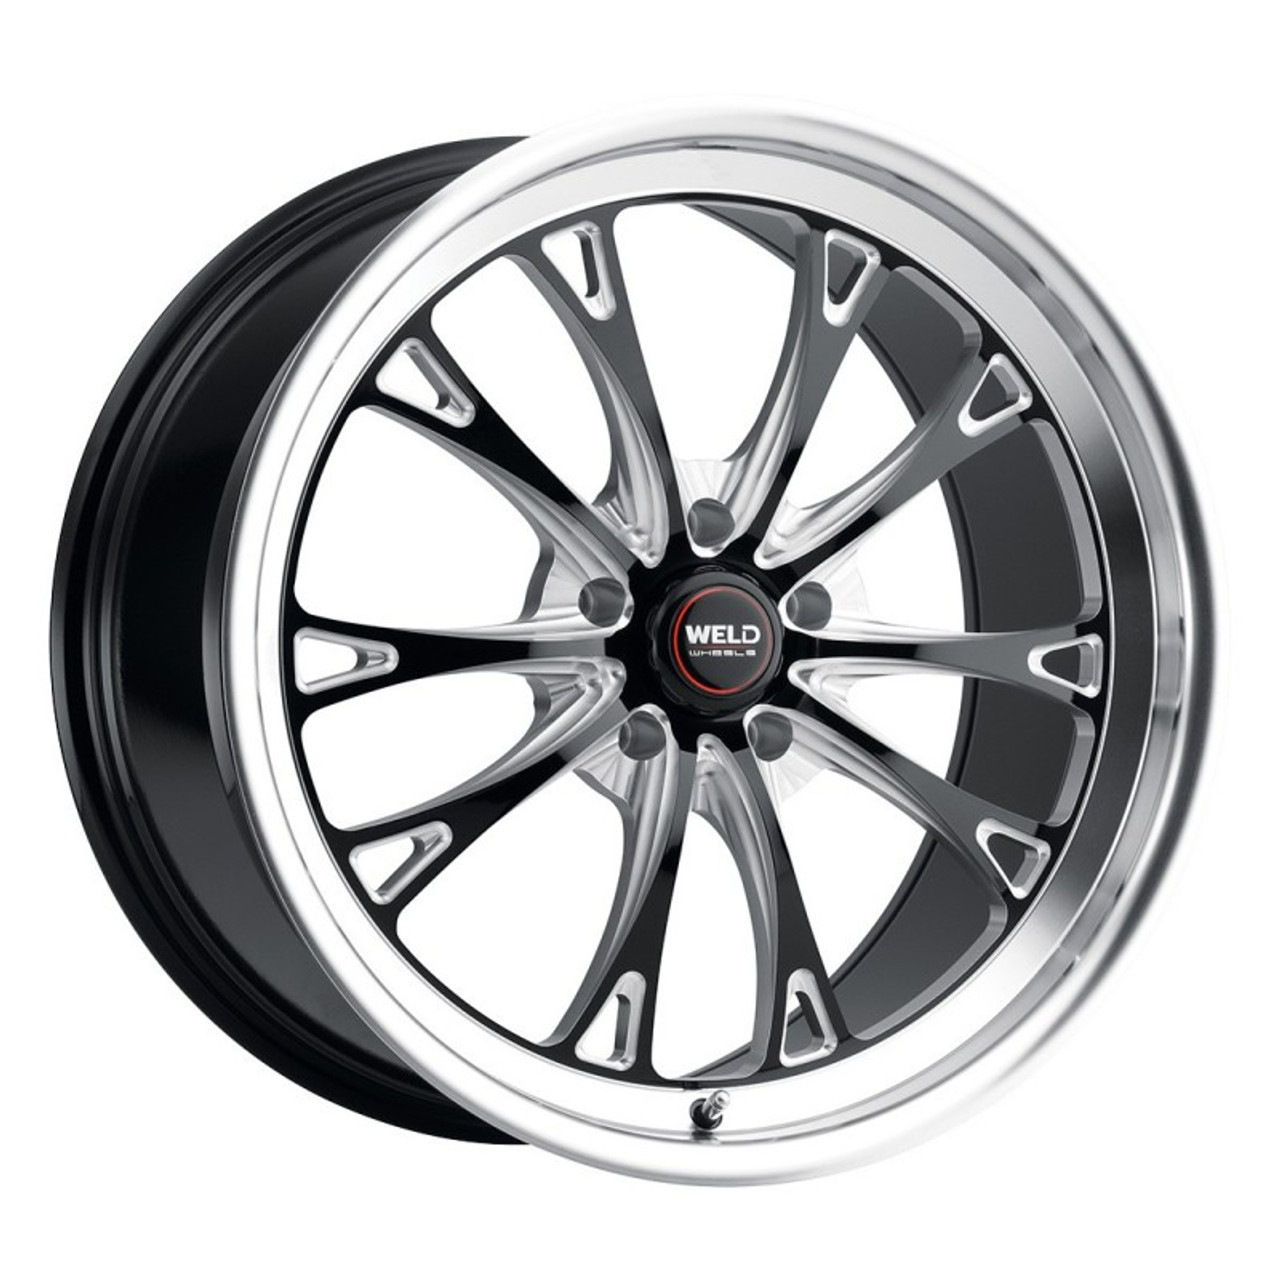 Weld Belmont Drag 17x10 Rear Wheel - CTS-V / Camaro